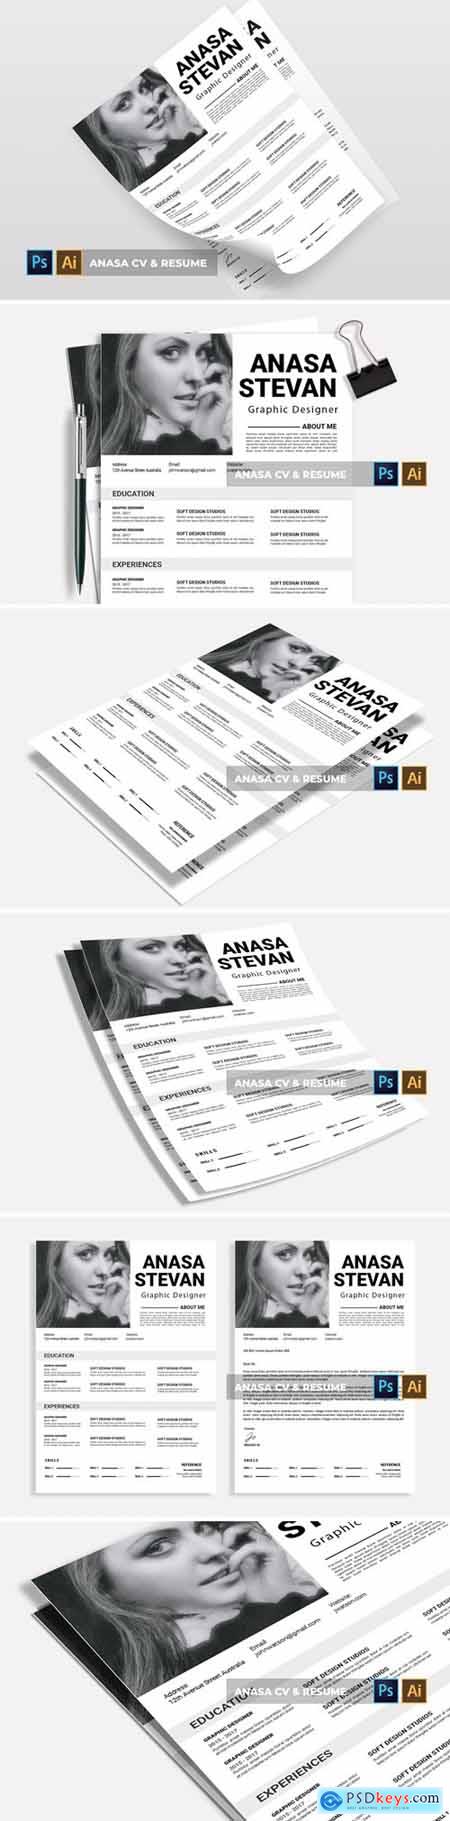 Anasa - CV & Resume